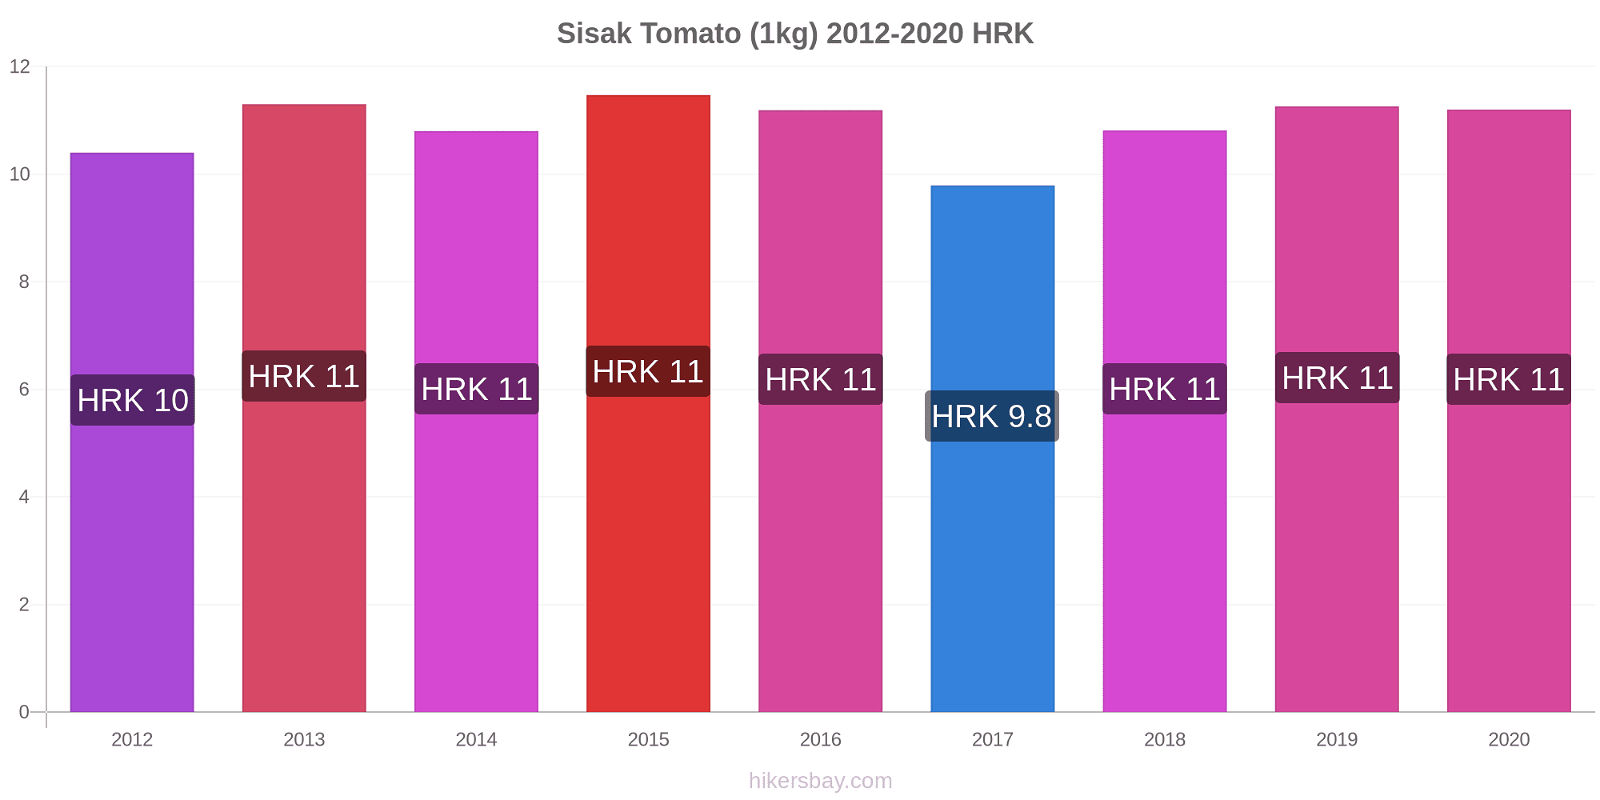 Sisak price changes Tomato (1kg) hikersbay.com